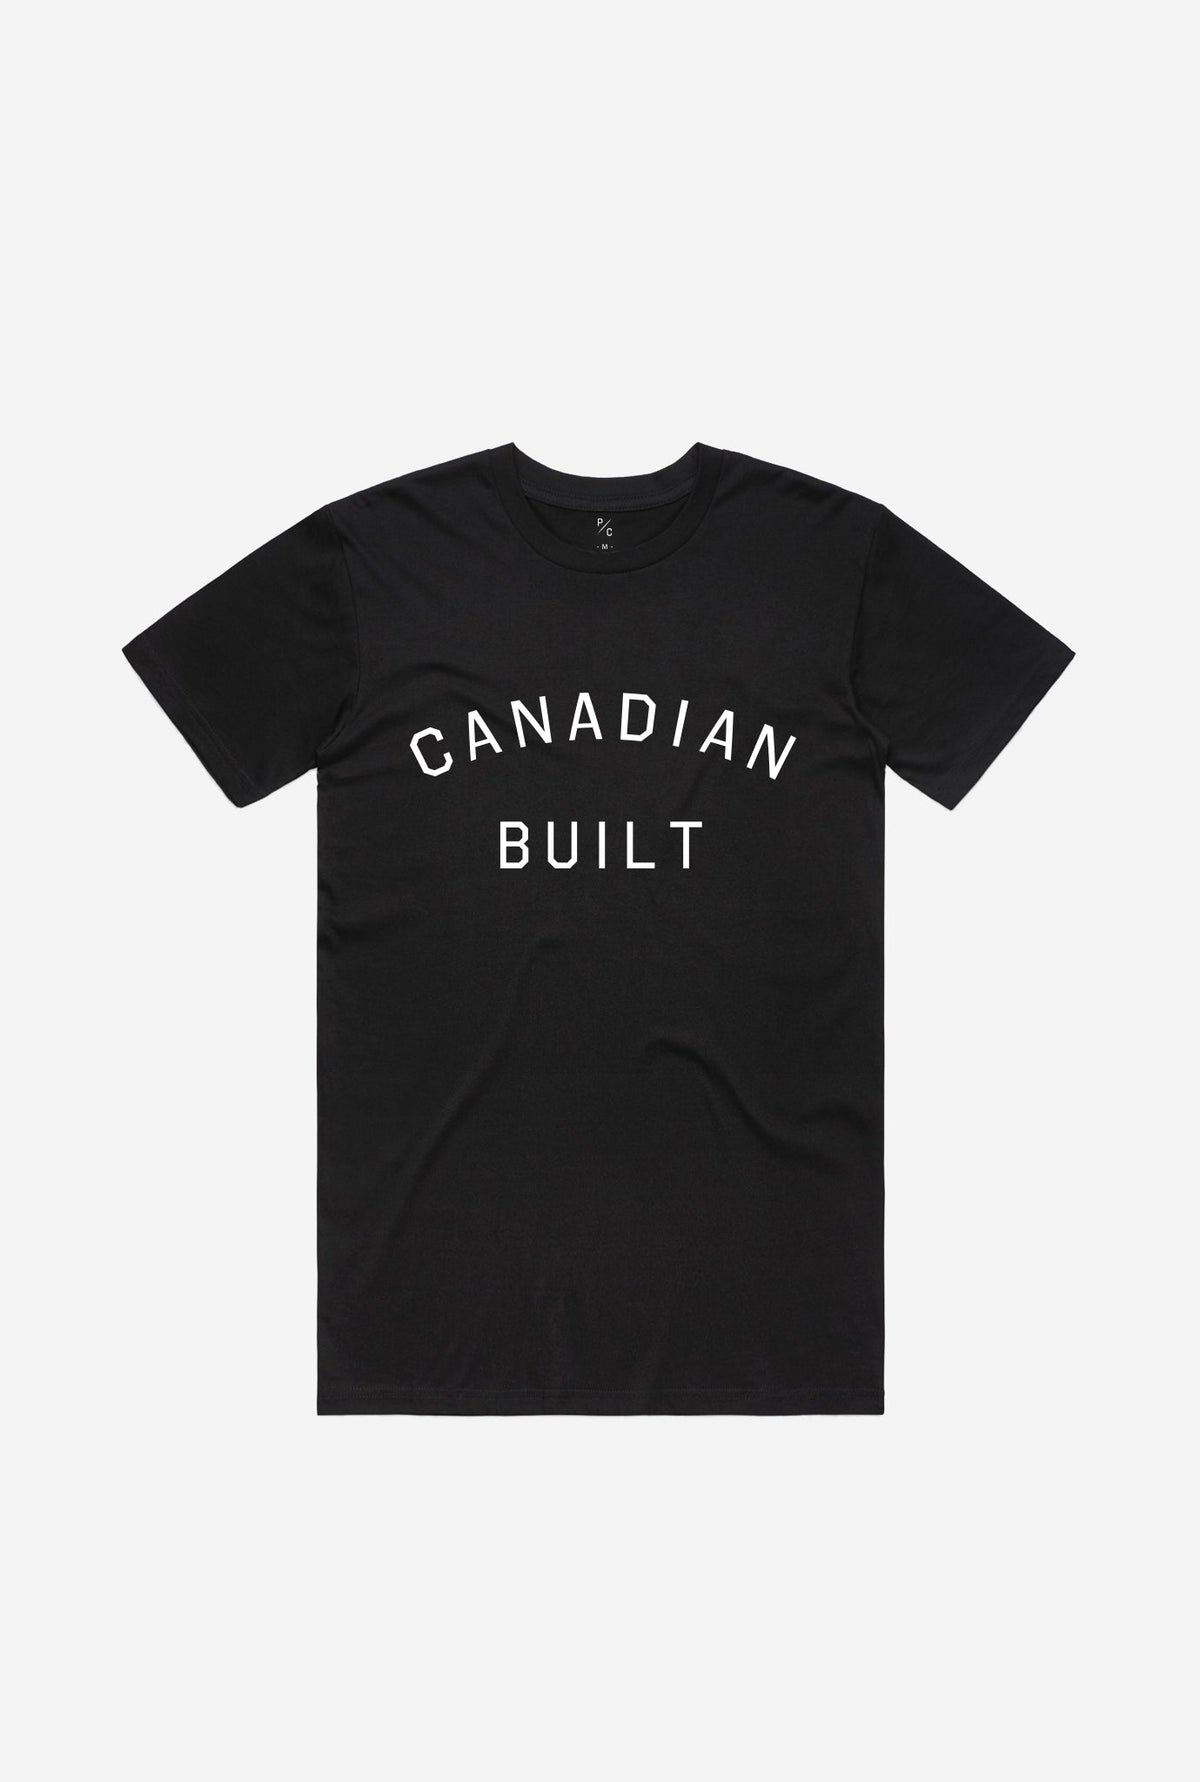 Canadian Built T-Shirt - Black